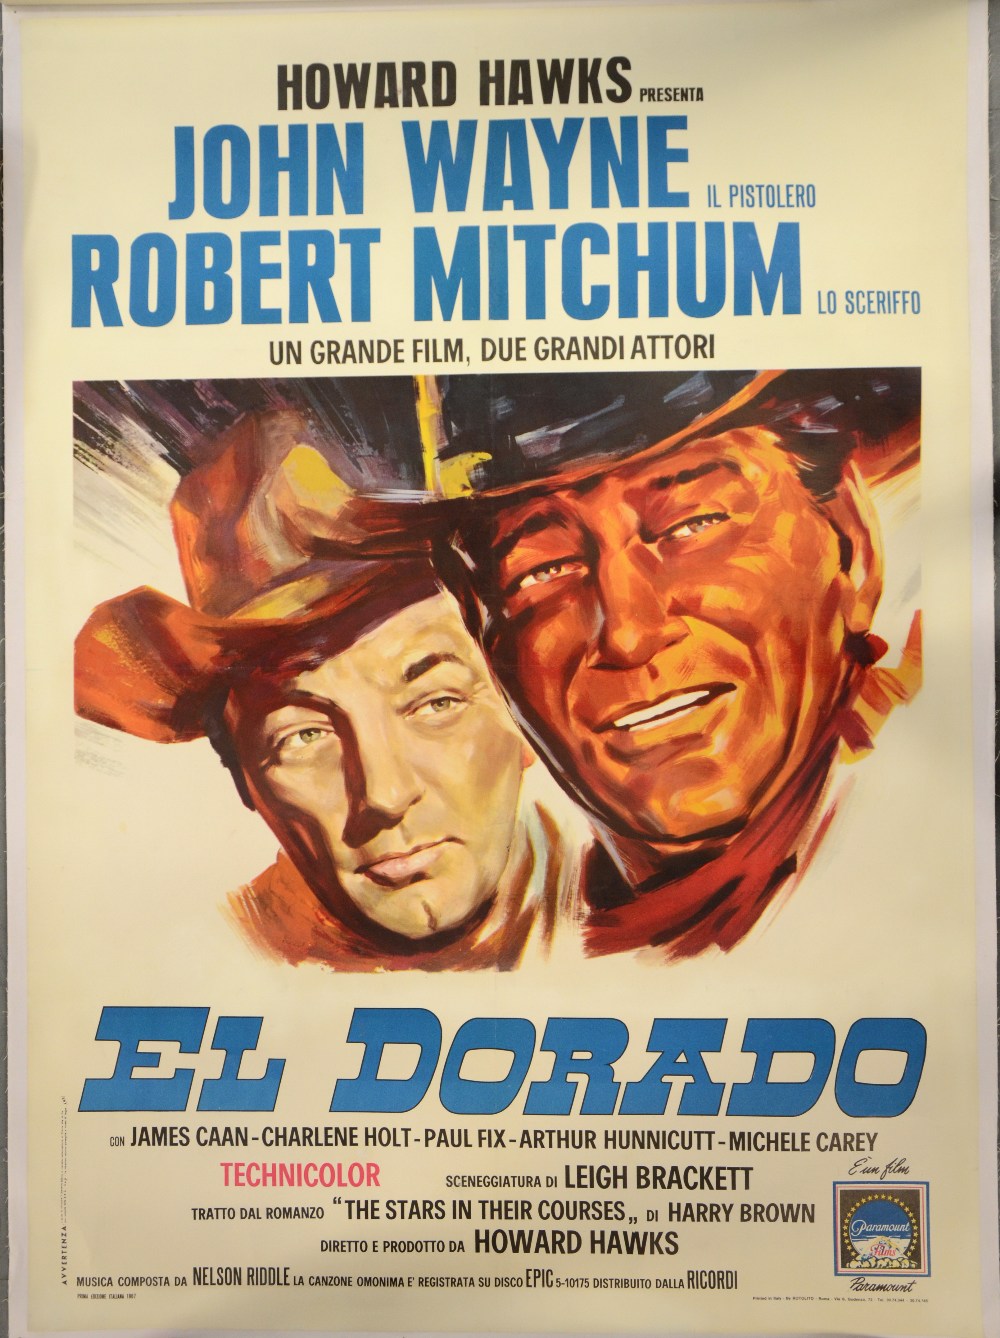 El Dorado (1967) Italian 2 Foglio film poster, western starring John Wayne, Robert Mitchum, - Image 3 of 4